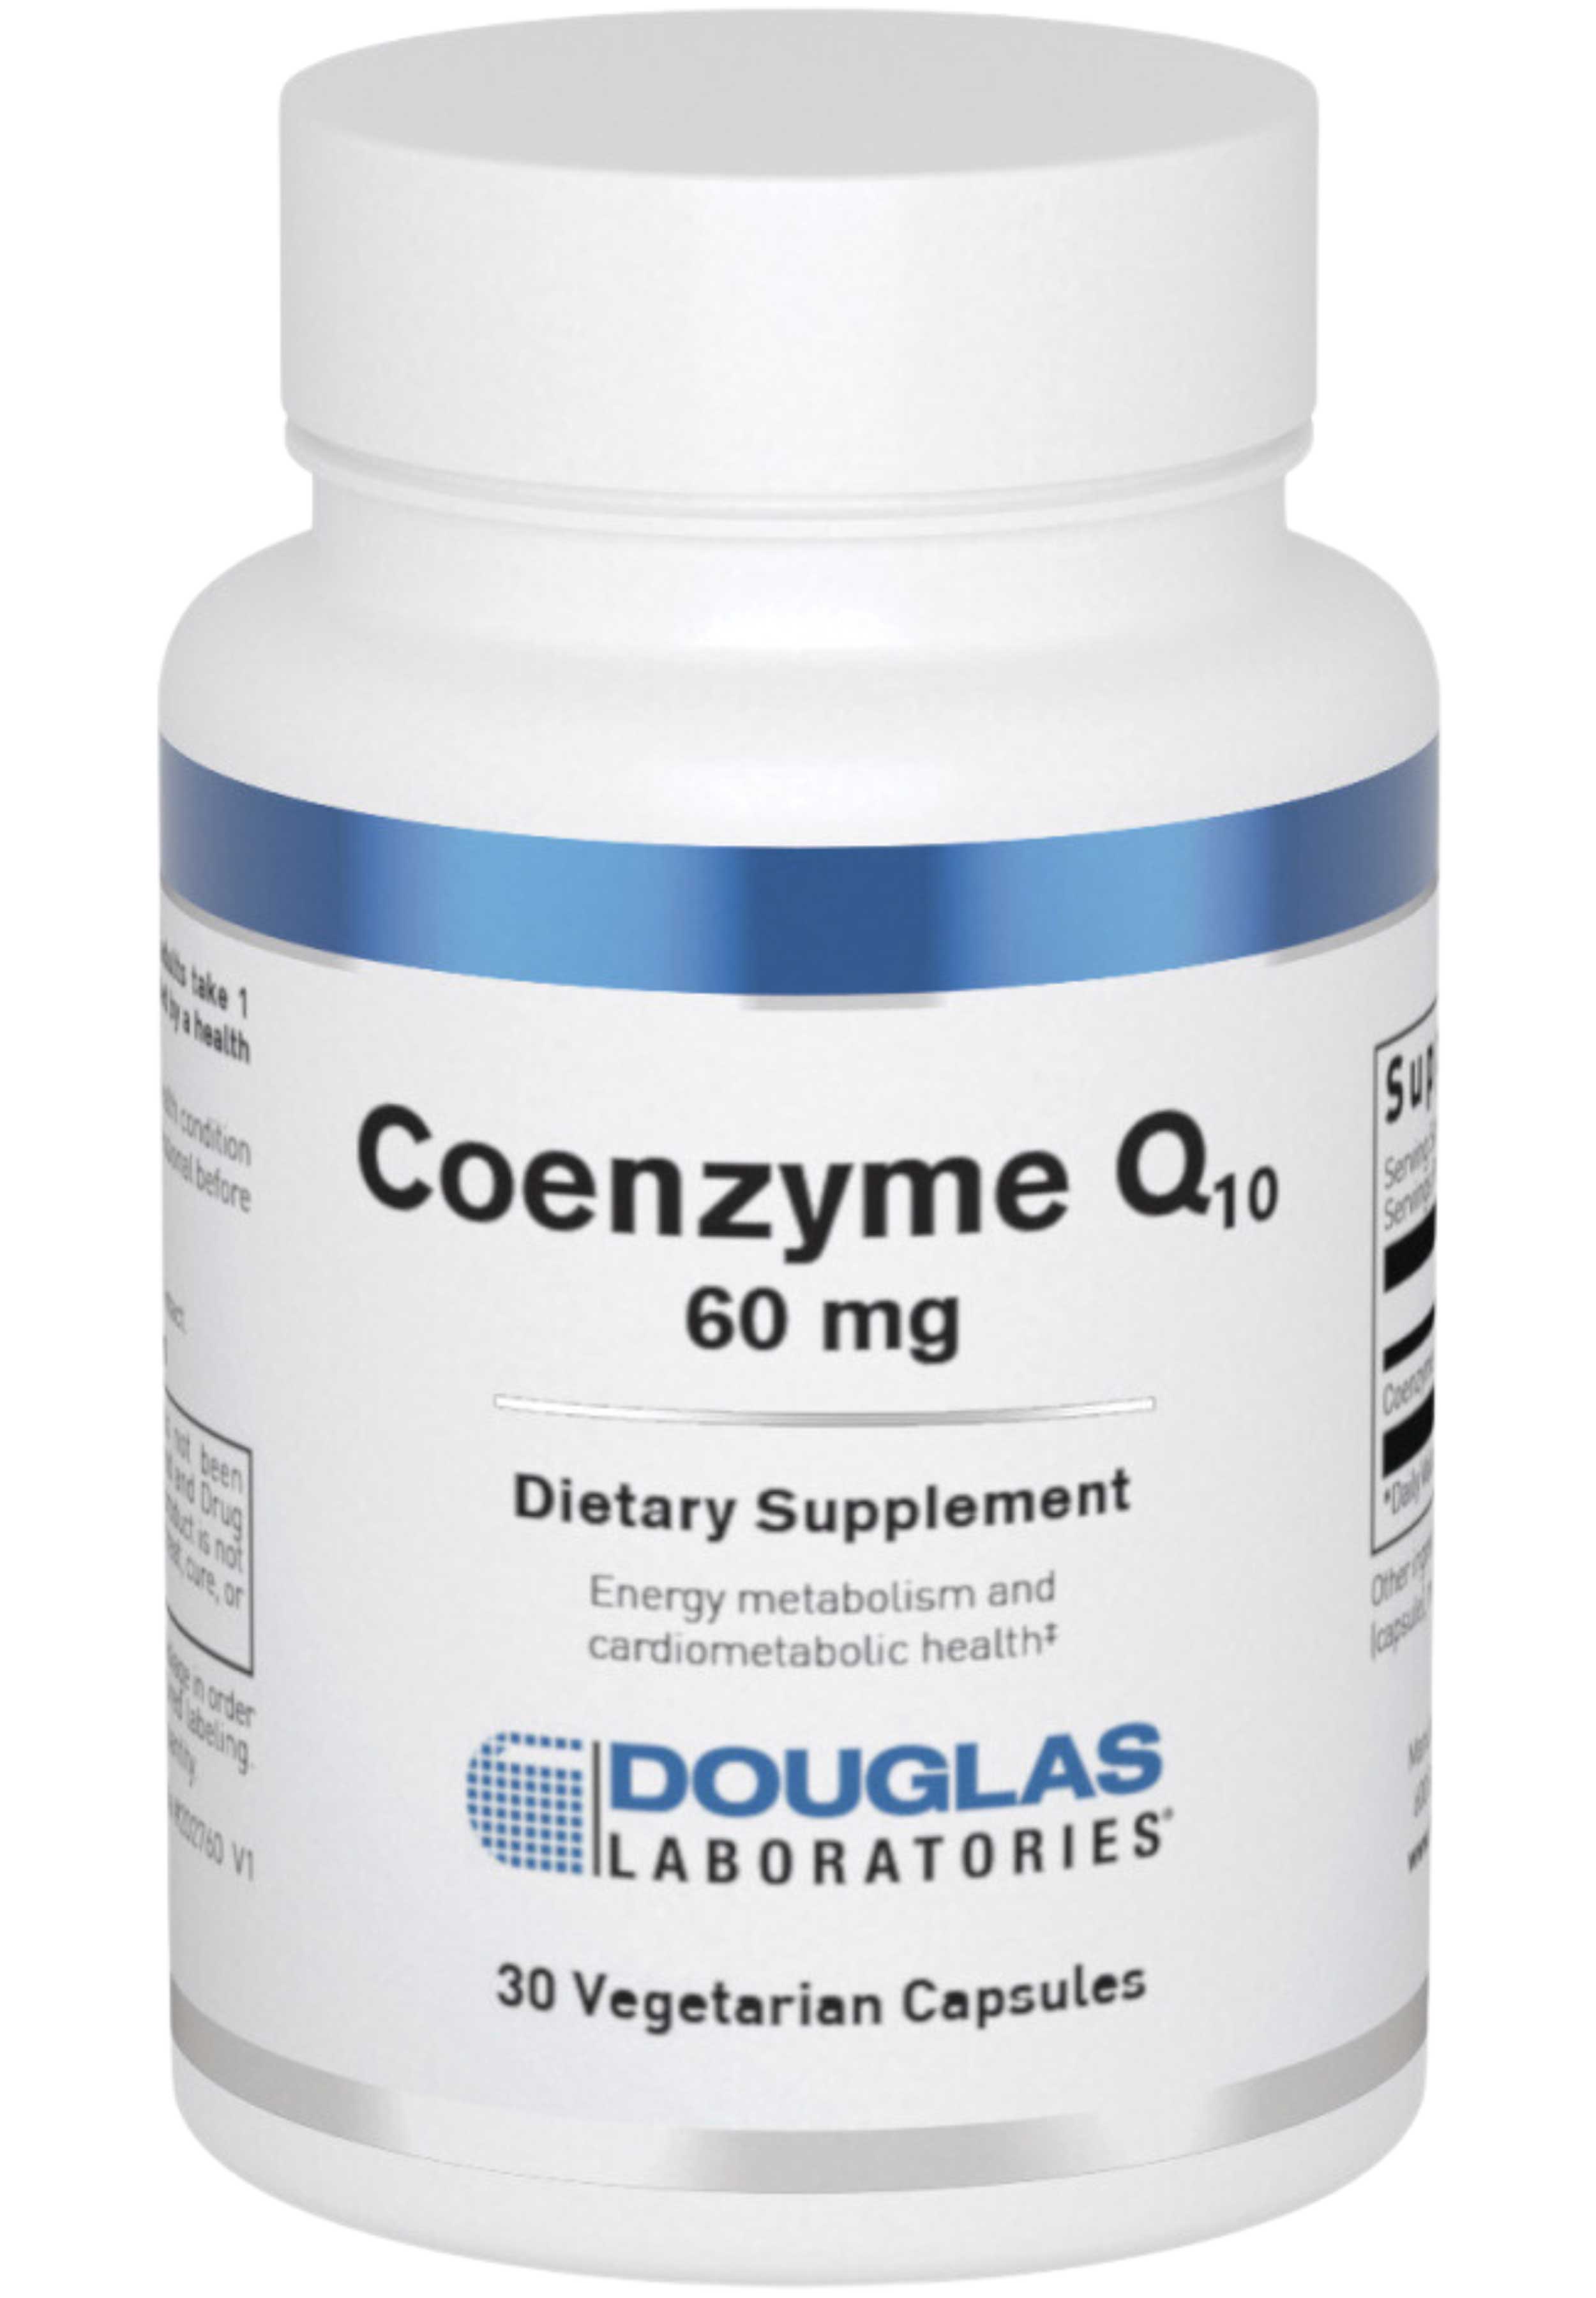 Douglas Laboratories Coenzyme Q10 60 mg